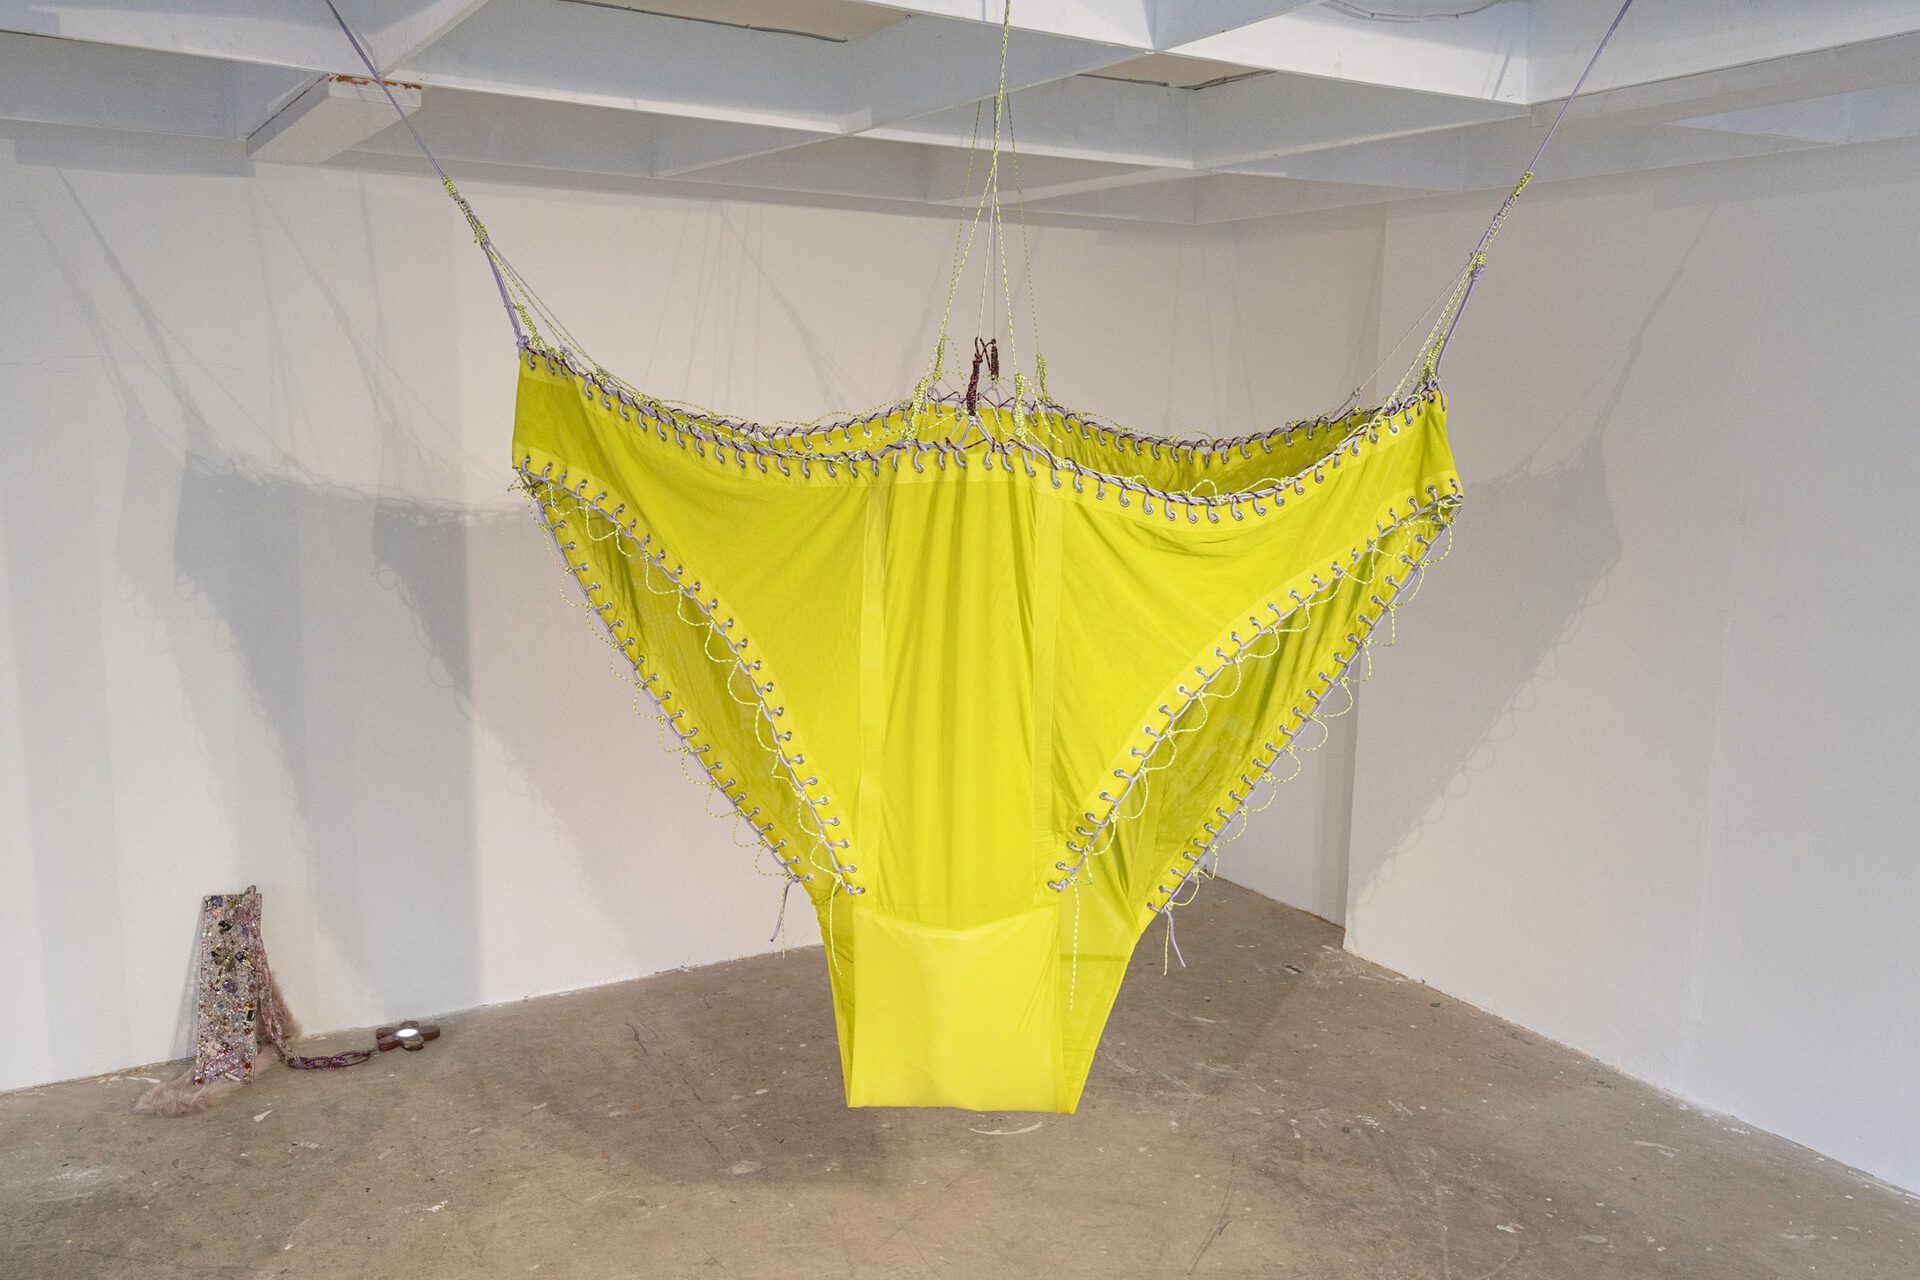 Flora Lechner, Slip in, 2022, polyester textile, foam, polypropylene ropes, 240 x 100 x 150 cm